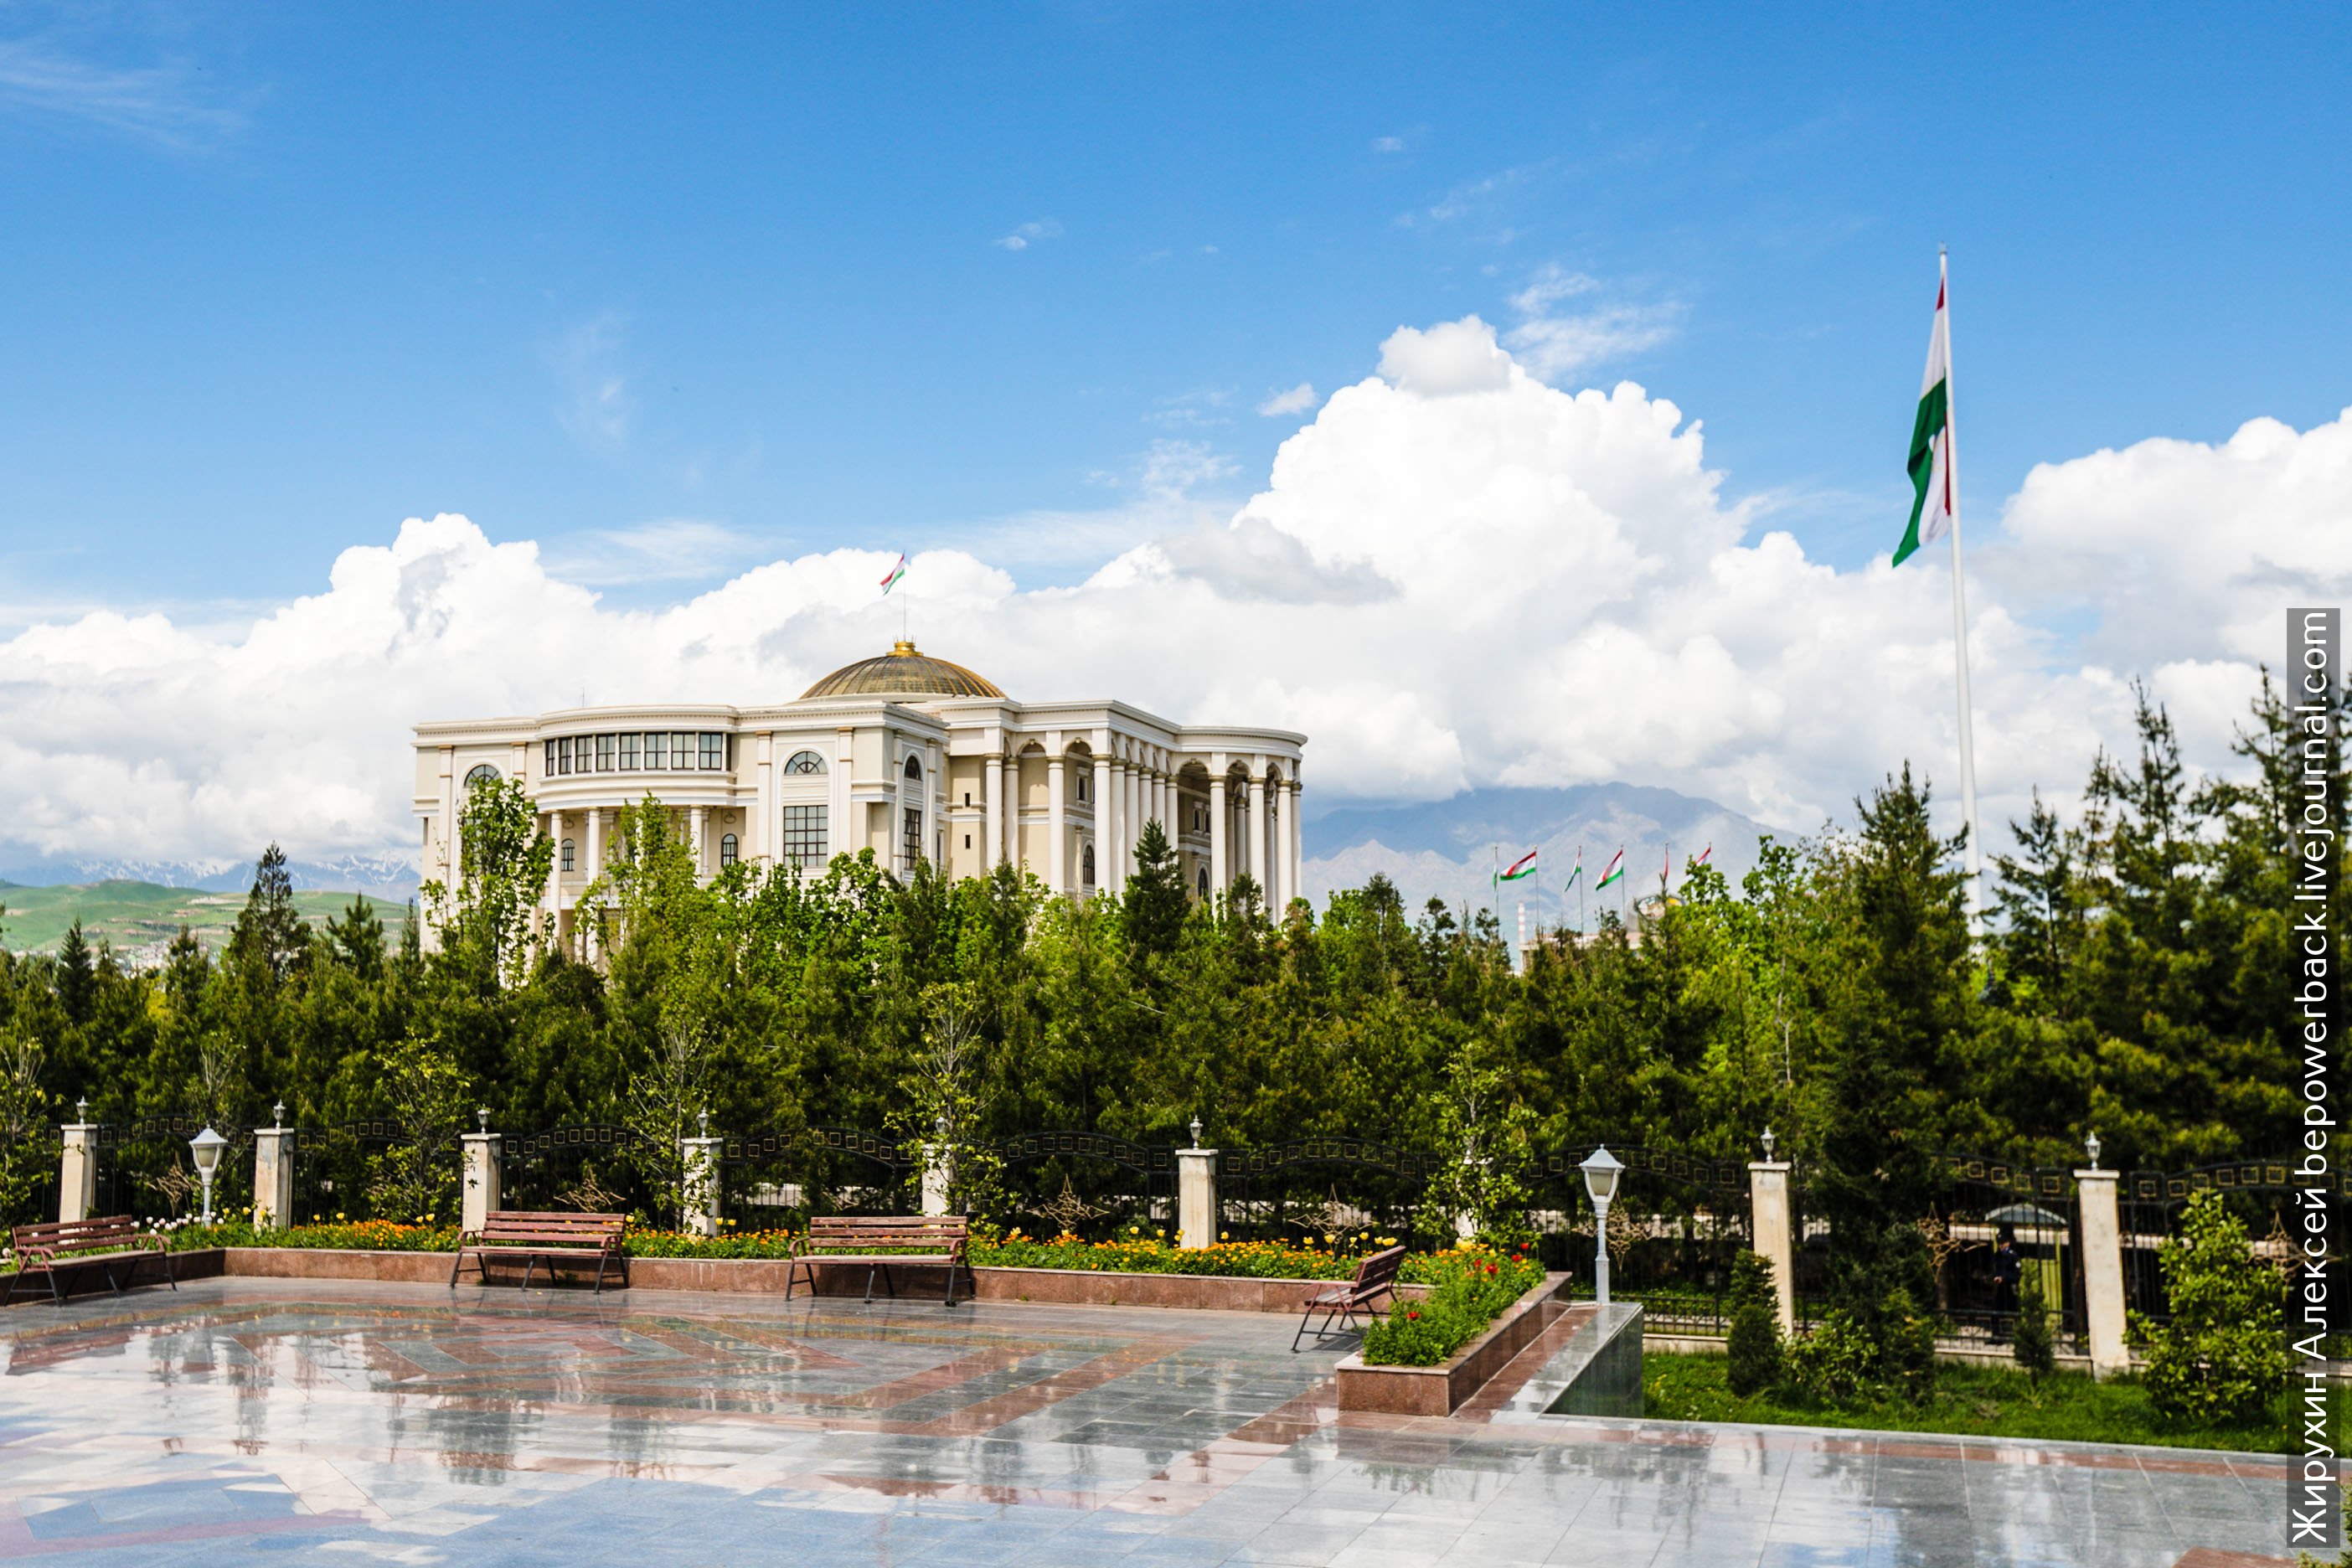 Нижний душанбе. Дворец нации (Душанбе). Столица Душанбе столица Таджикистана. Касри миллат Таджикистан. Резиденция президента Таджикистана.